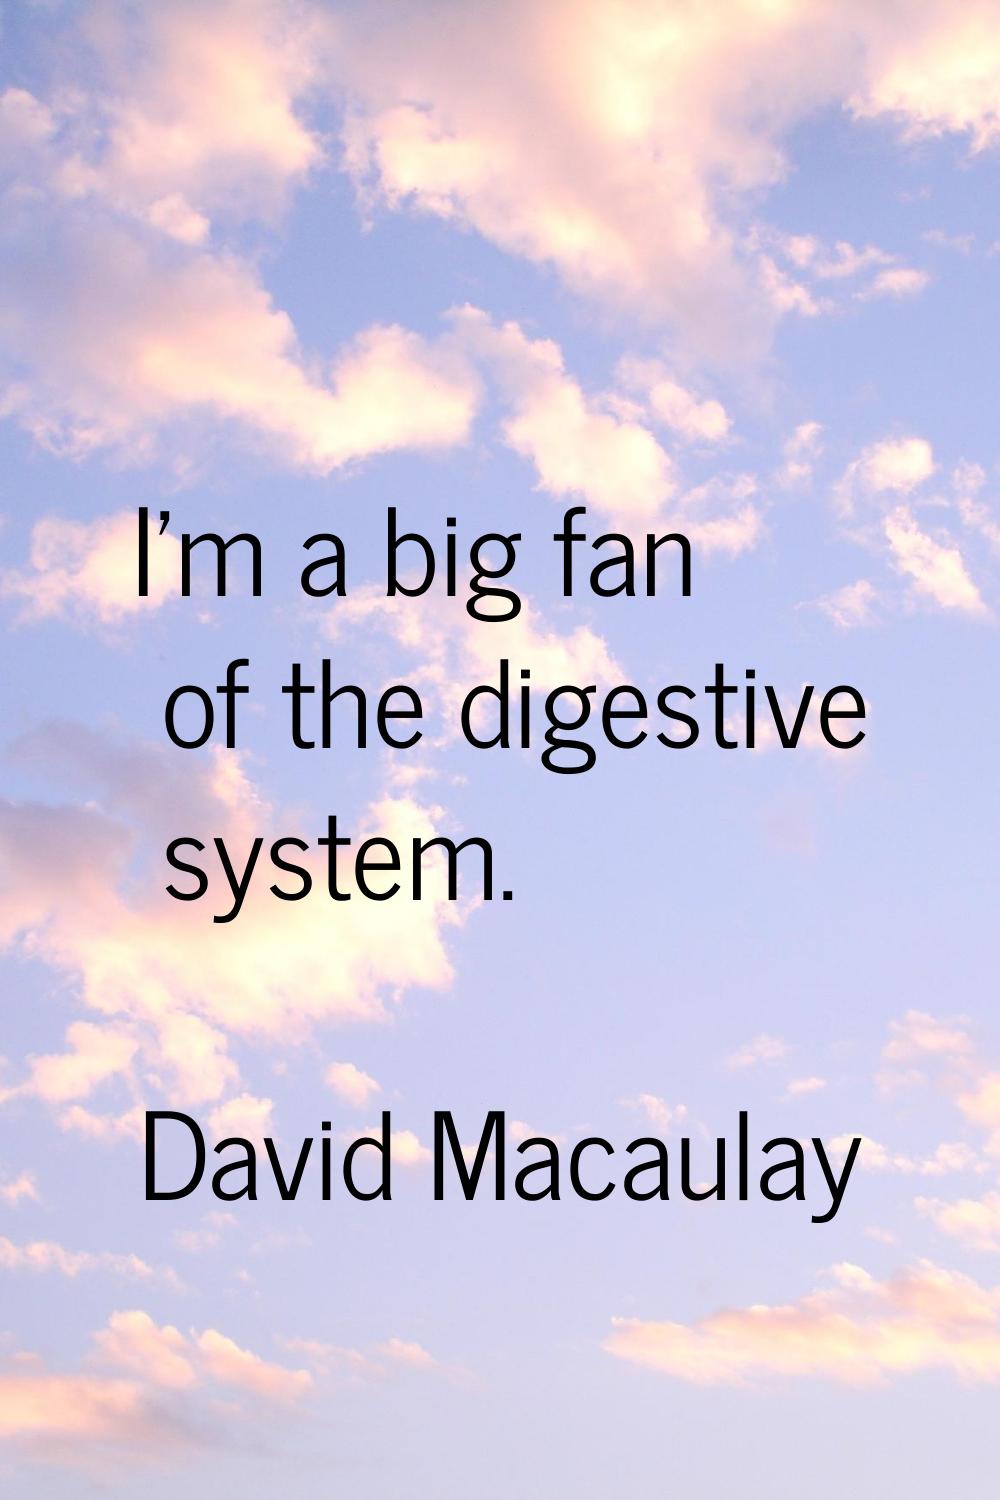 I'm a big fan of the digestive system.